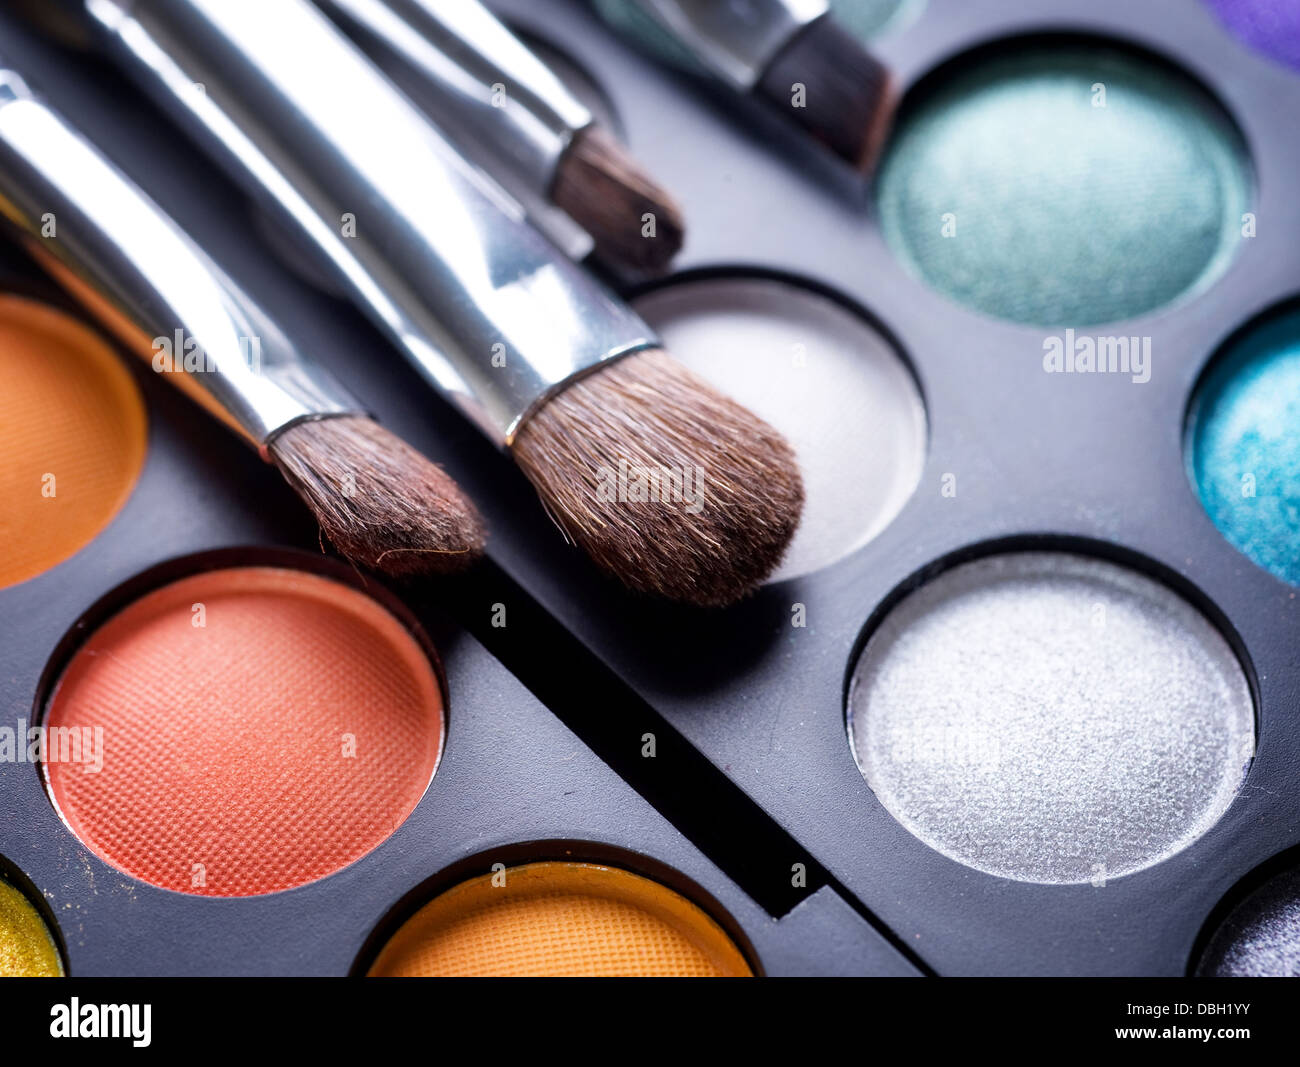 Makeup brushes and make-up eye shadows Stock Photo